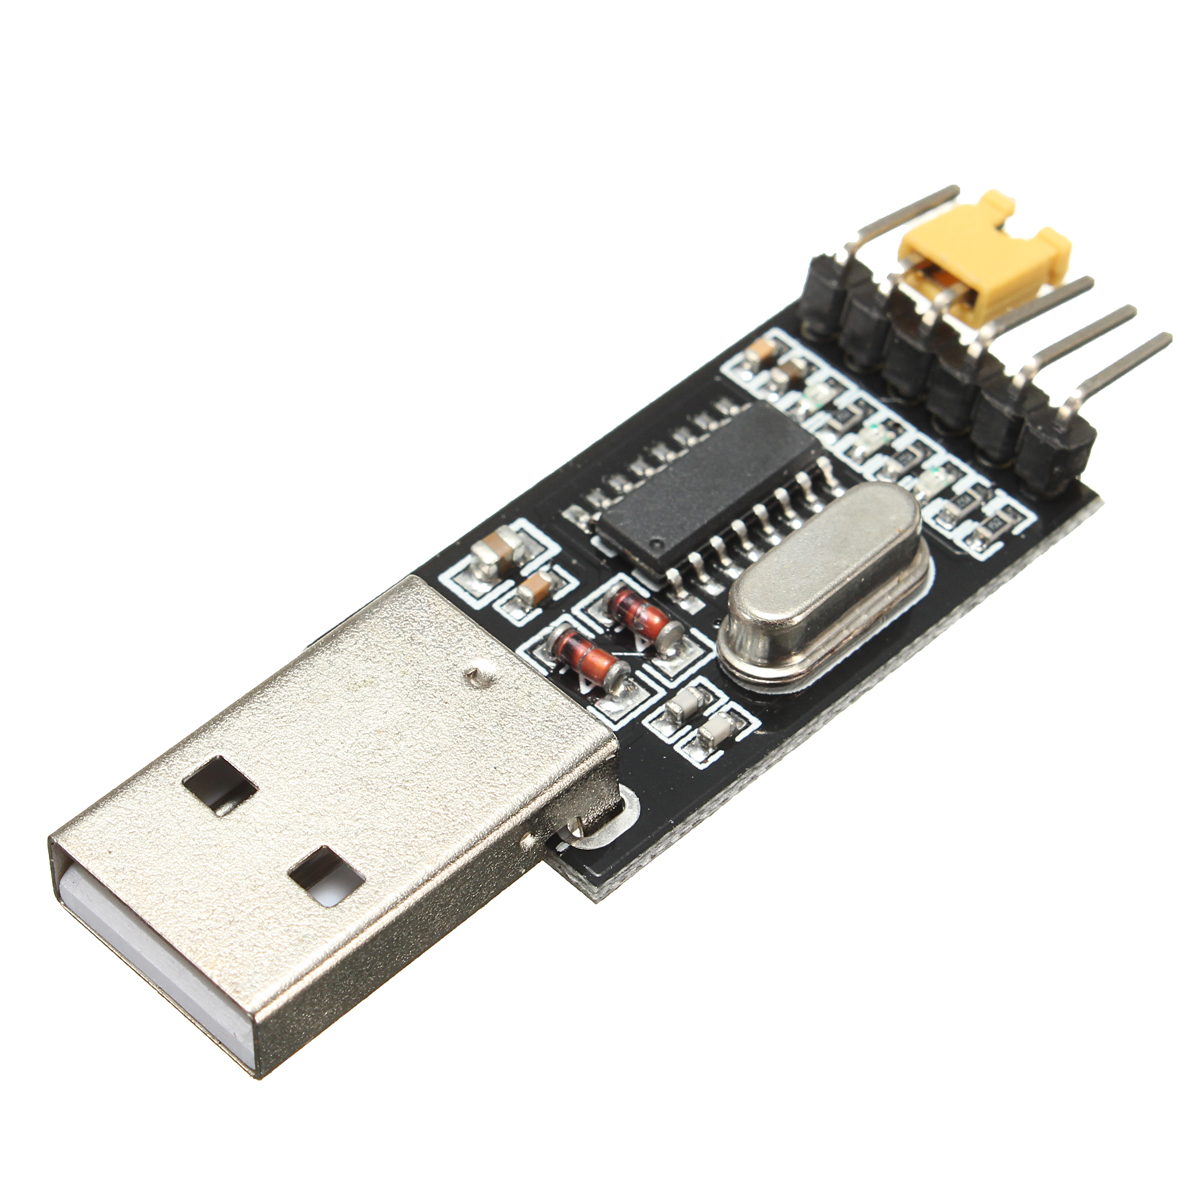 3.3V 5V USB to TTL Converter CH340G UART Serial Adapter Module STC 1